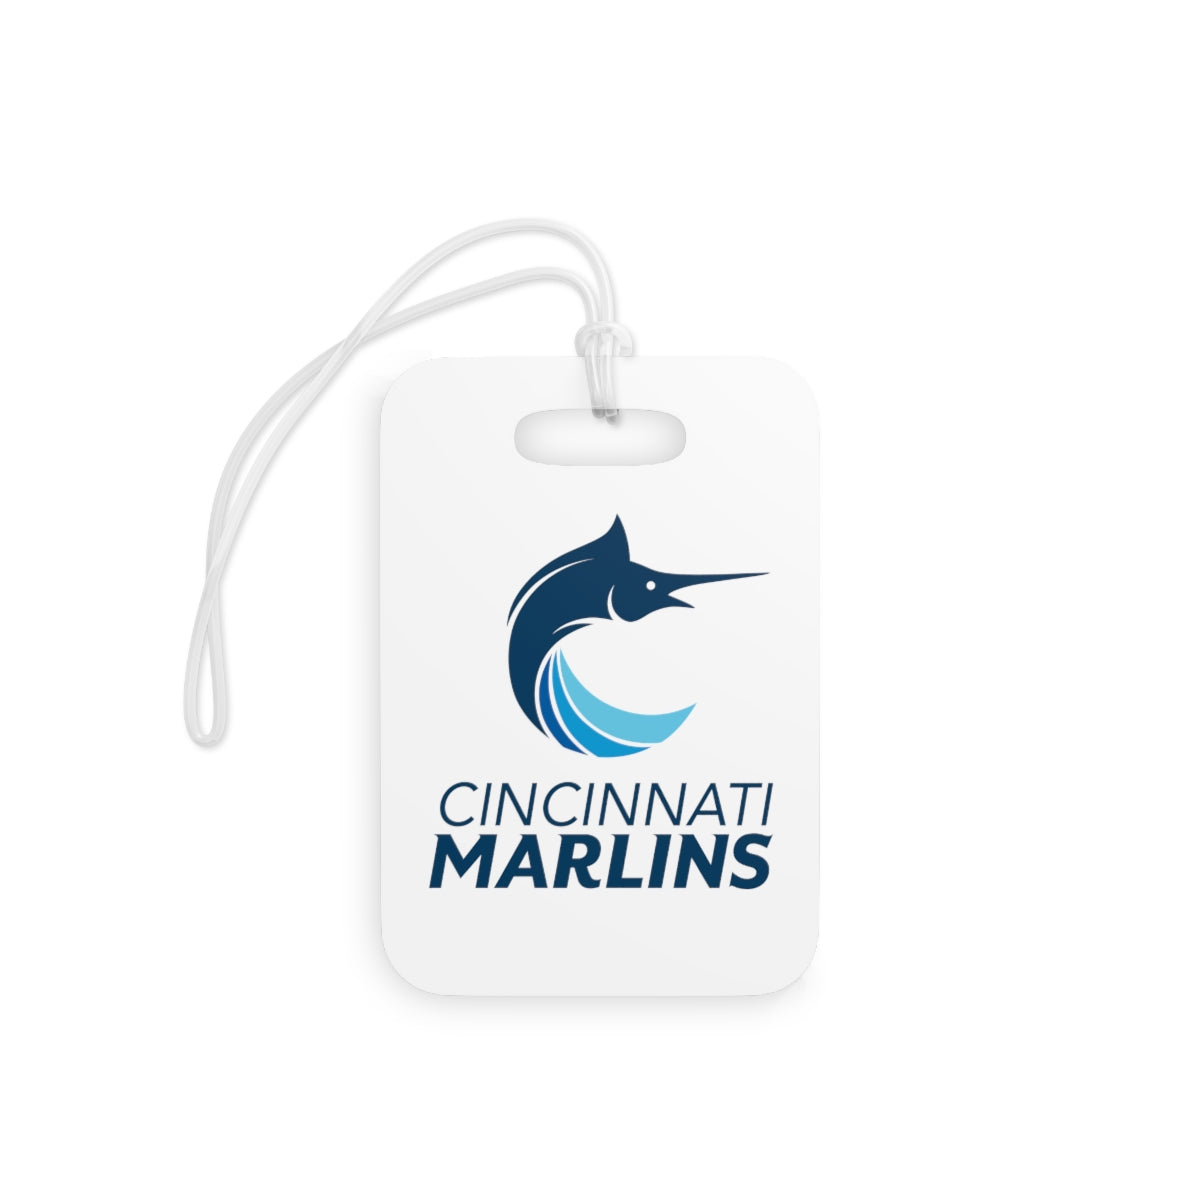 Marlins Bag Tag